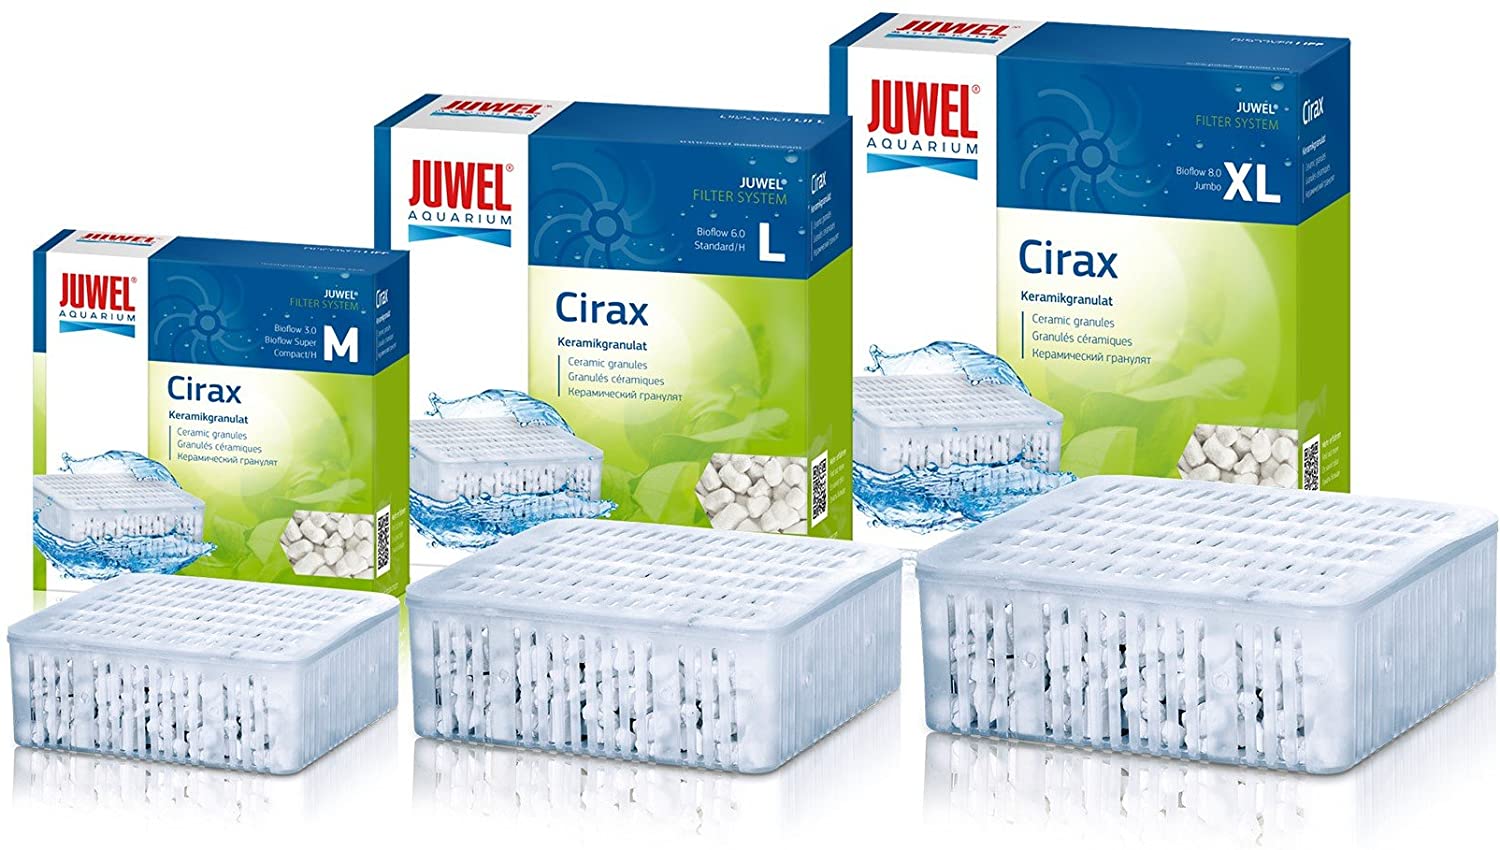 Juwel Cirax - Ceramic Granulate